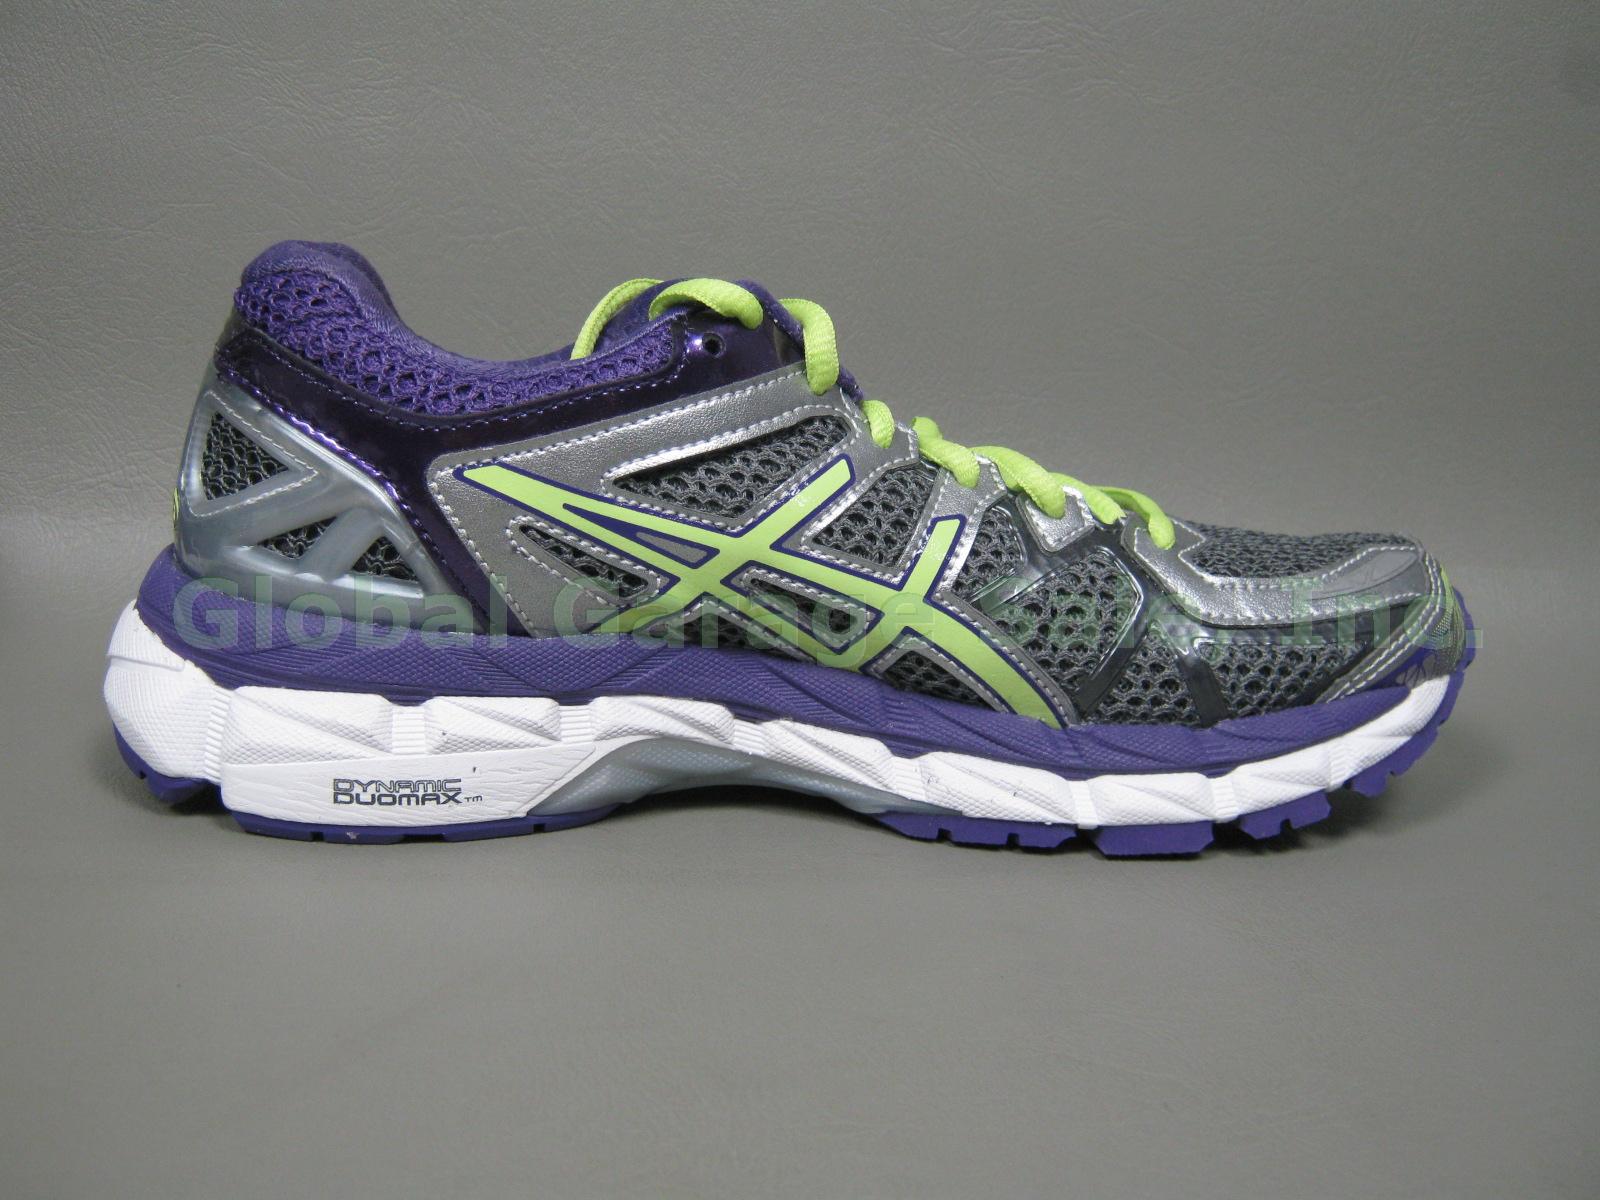 NEW Asics Womens Gel Kayano 21 Running Shoes US 6 EUR 37 Charcoal Green Purple 4